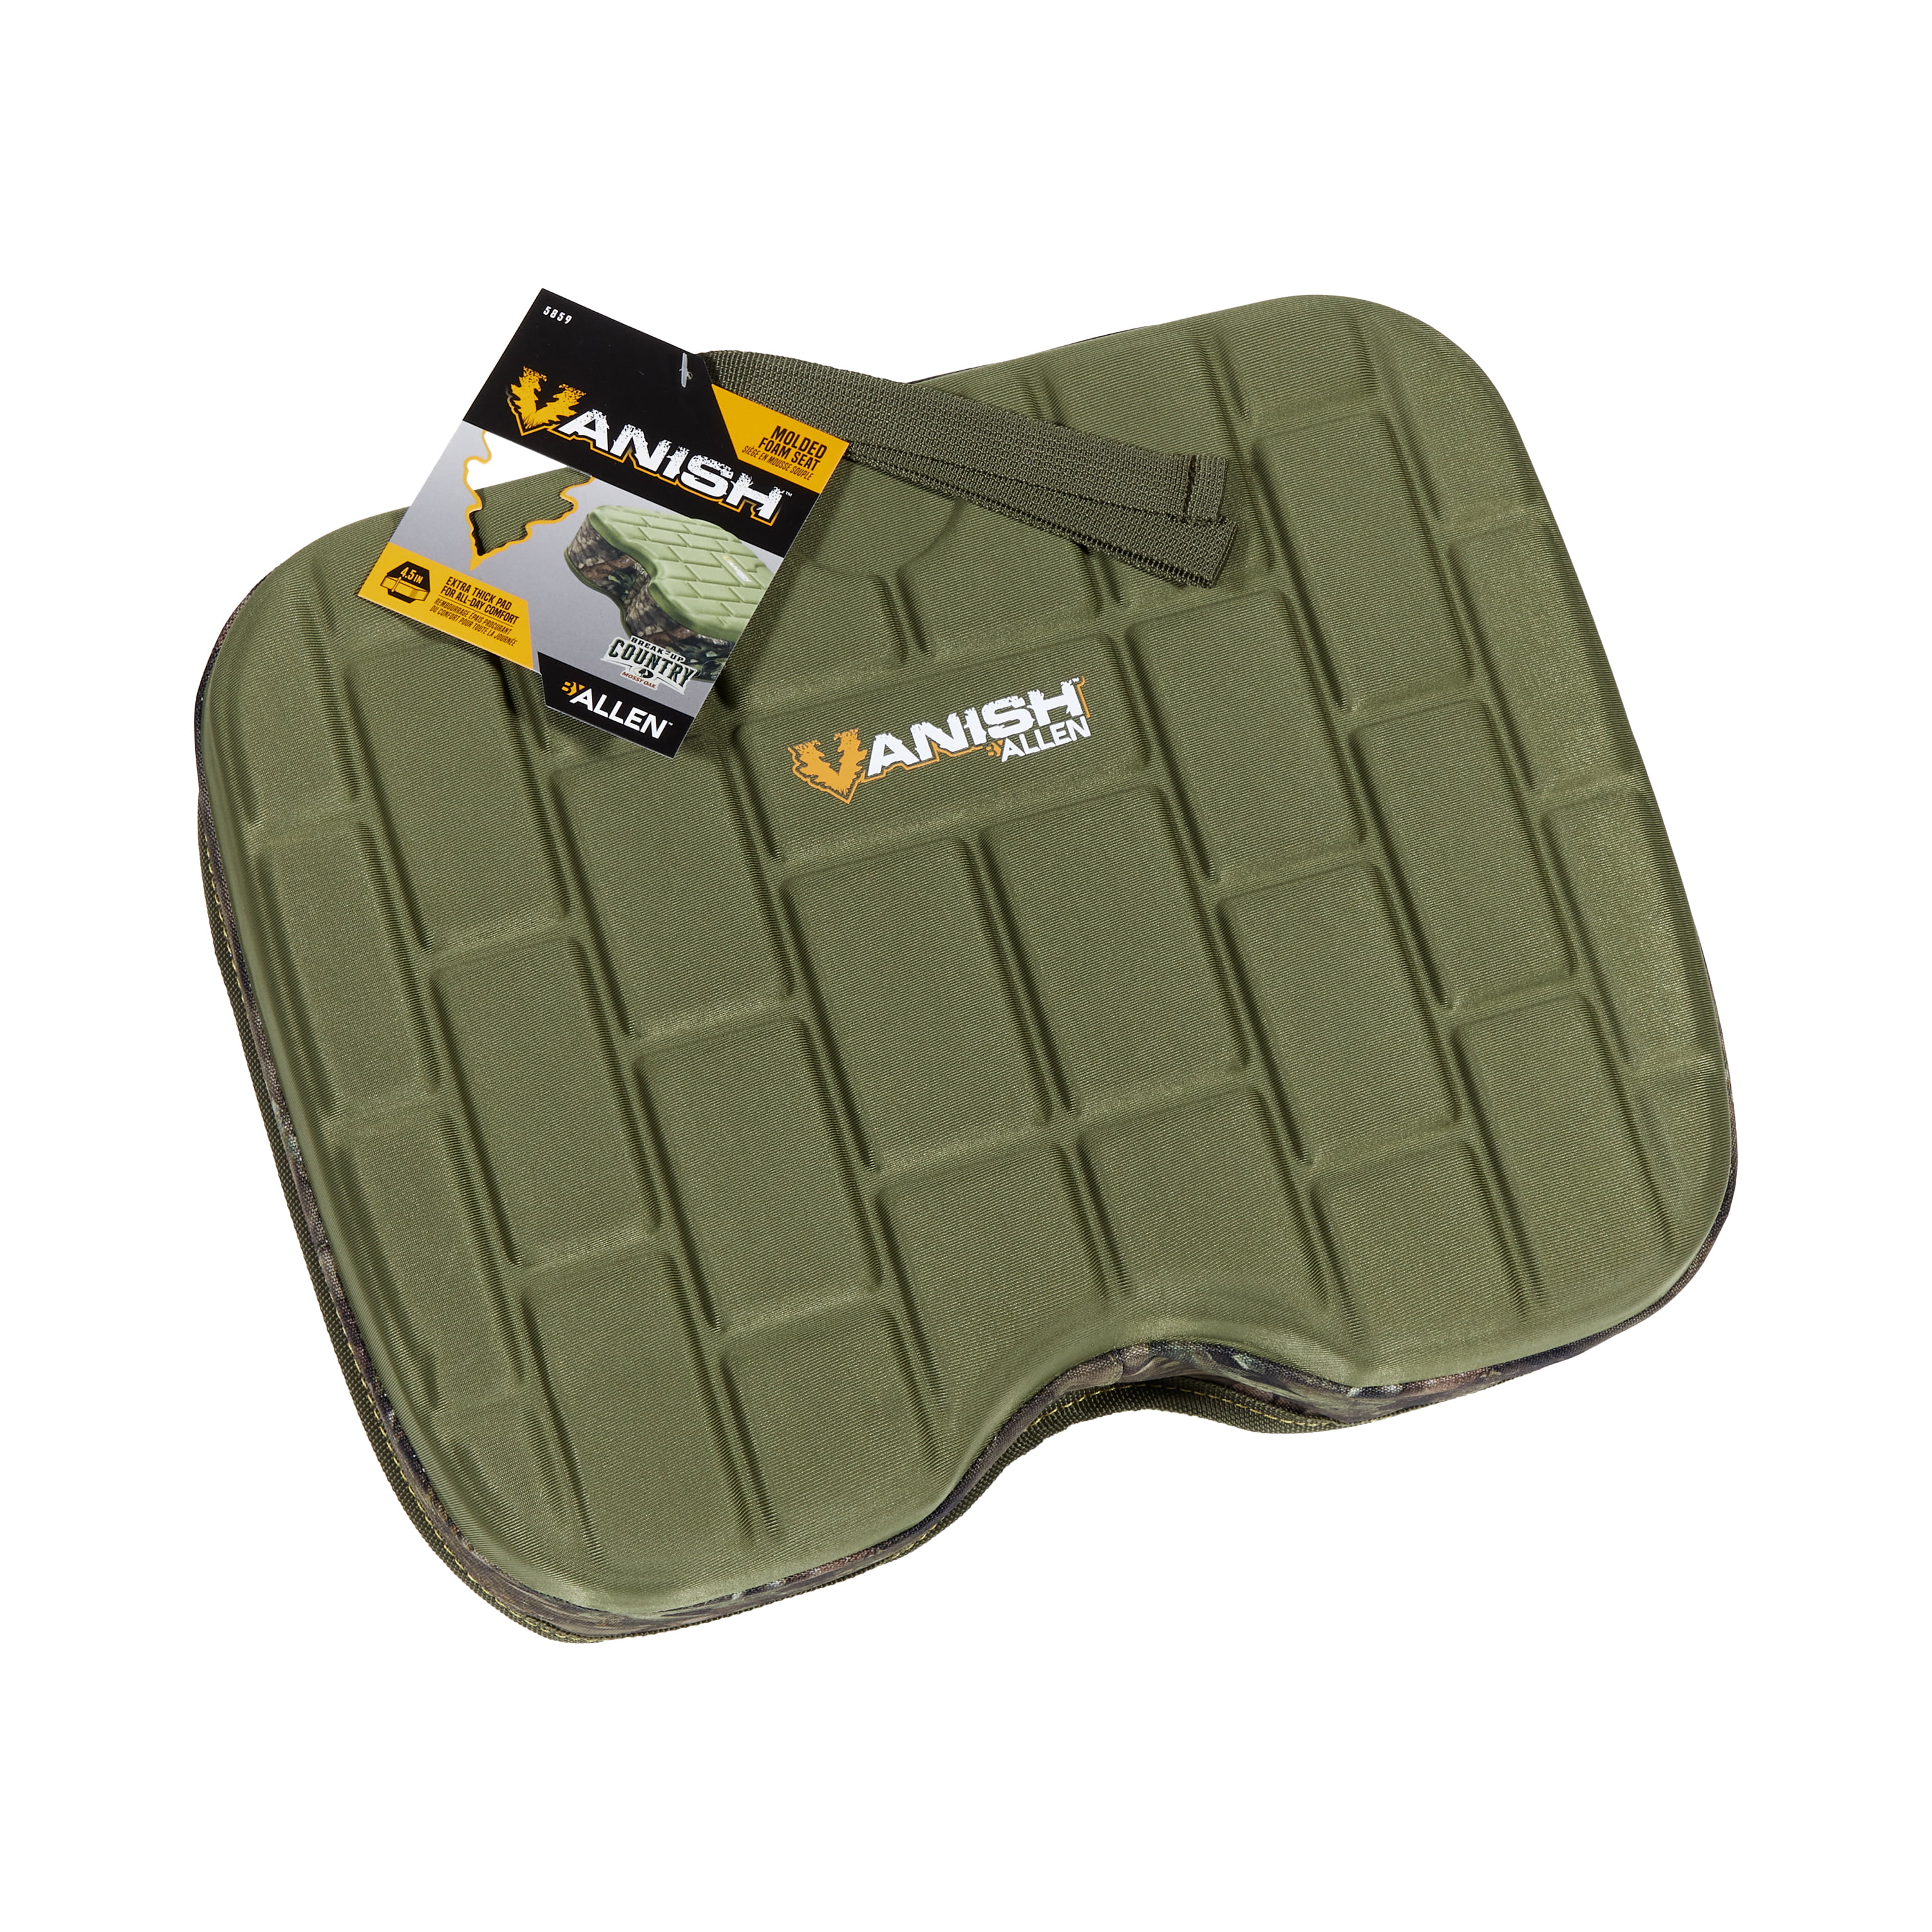 Camo Foam Hunting Seat Pad with Adjustable Strap MDSHA-24 - Mydays Outdoor